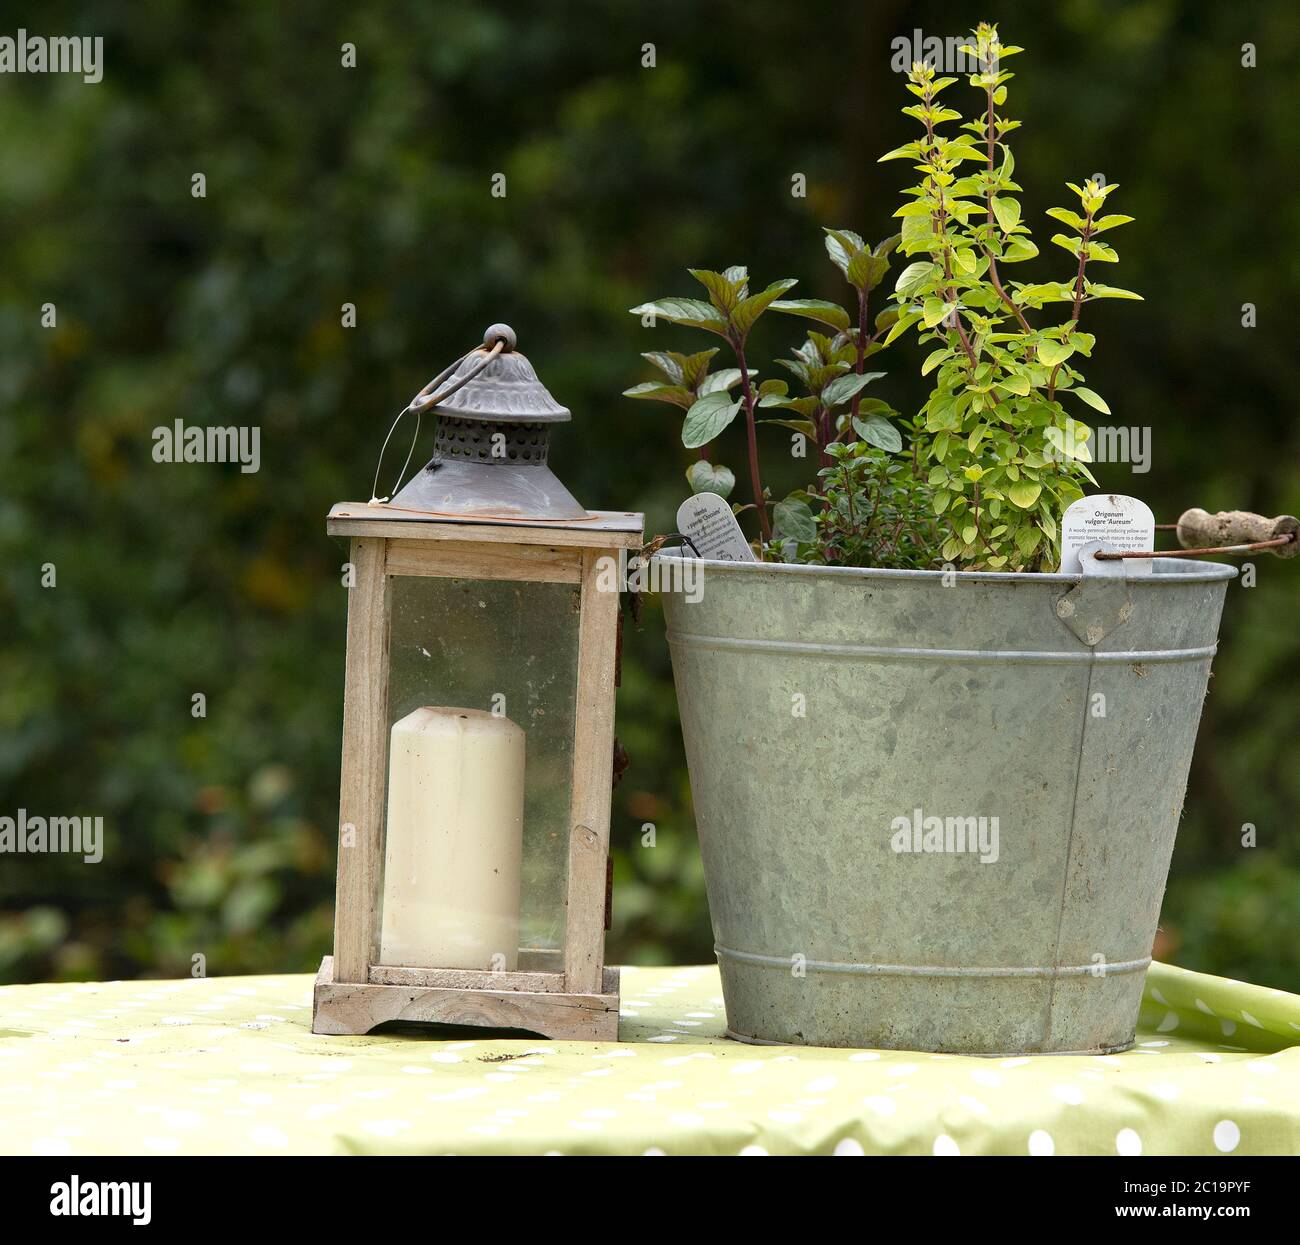 lantern and herb garden Stock Photo